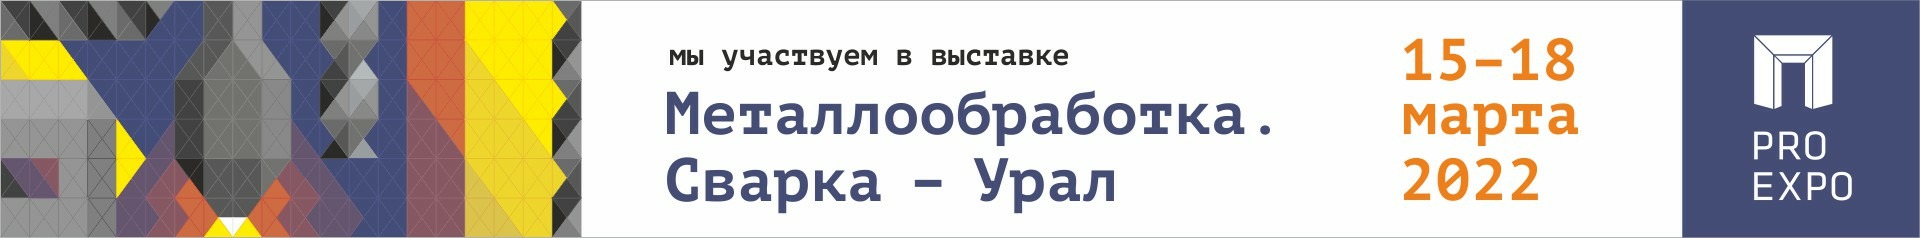 Металлообработка. Сварка — Урал 15–18 марта 2022